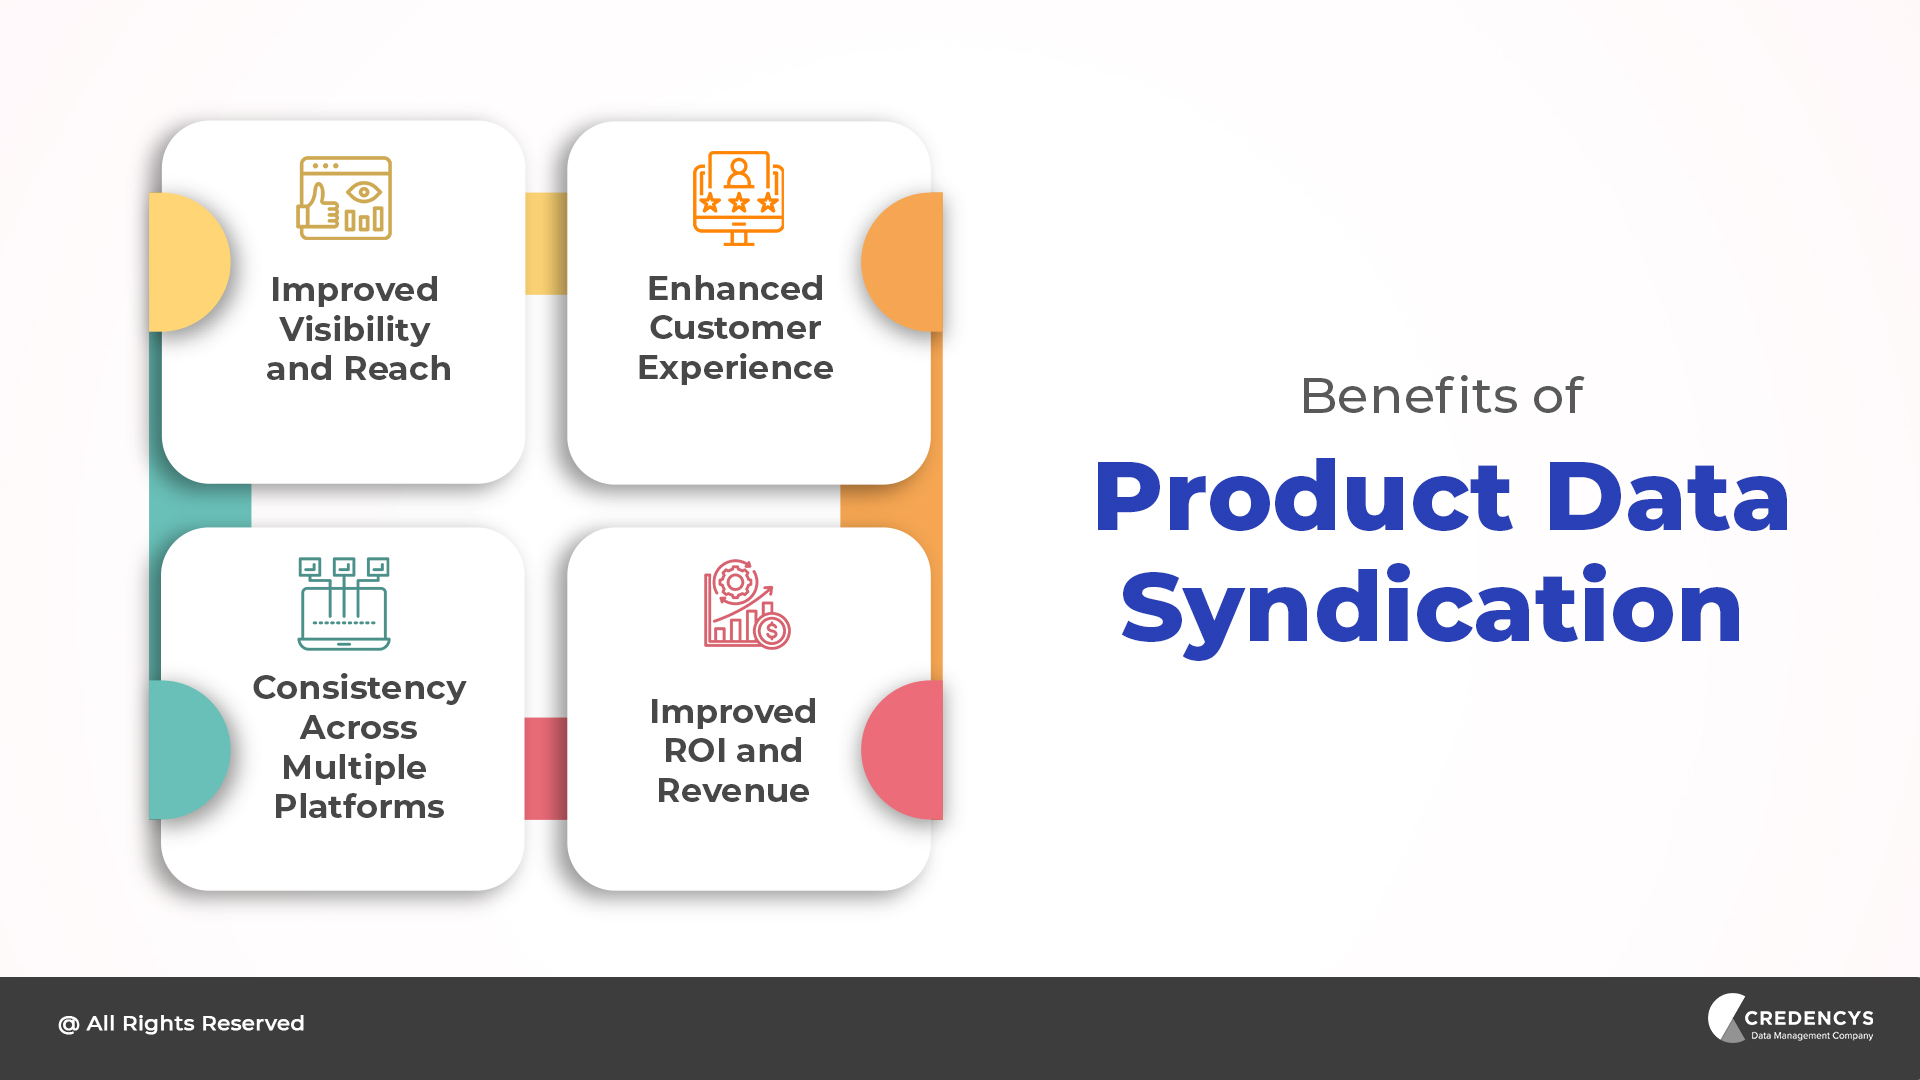 Benefits of Product Data Syndication